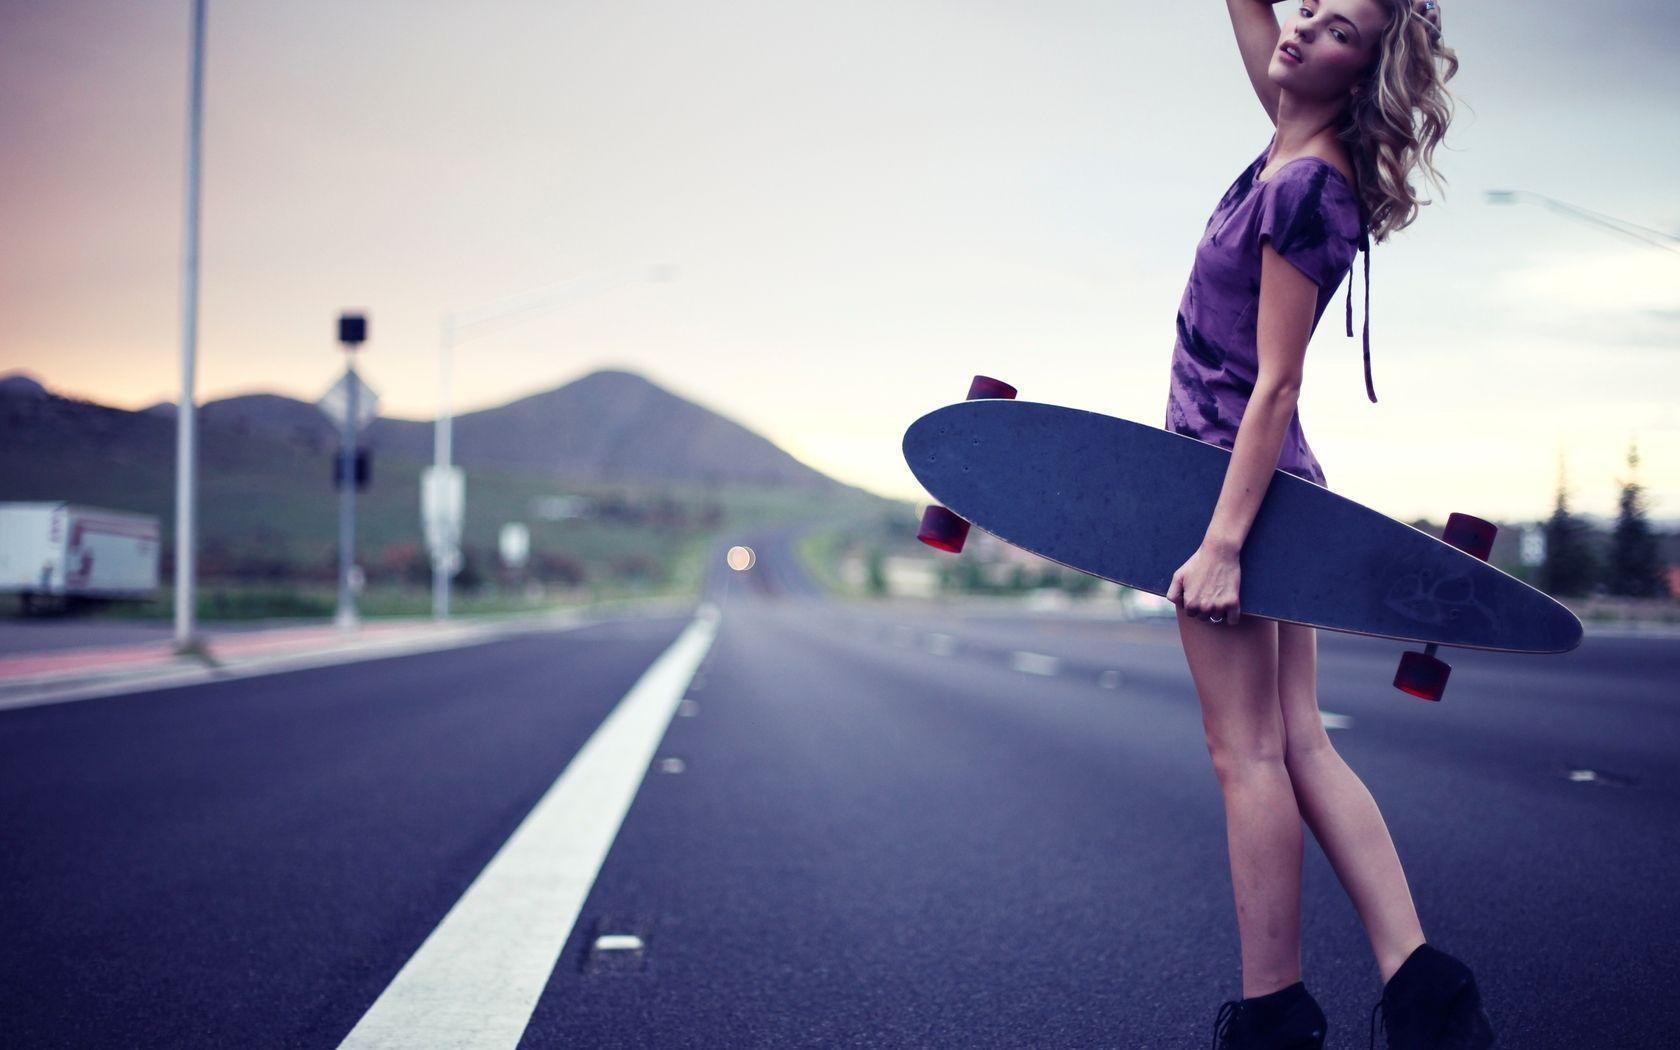 Girl Skateboard Wallpaper. Piccry.com: Picture Idea Gallery